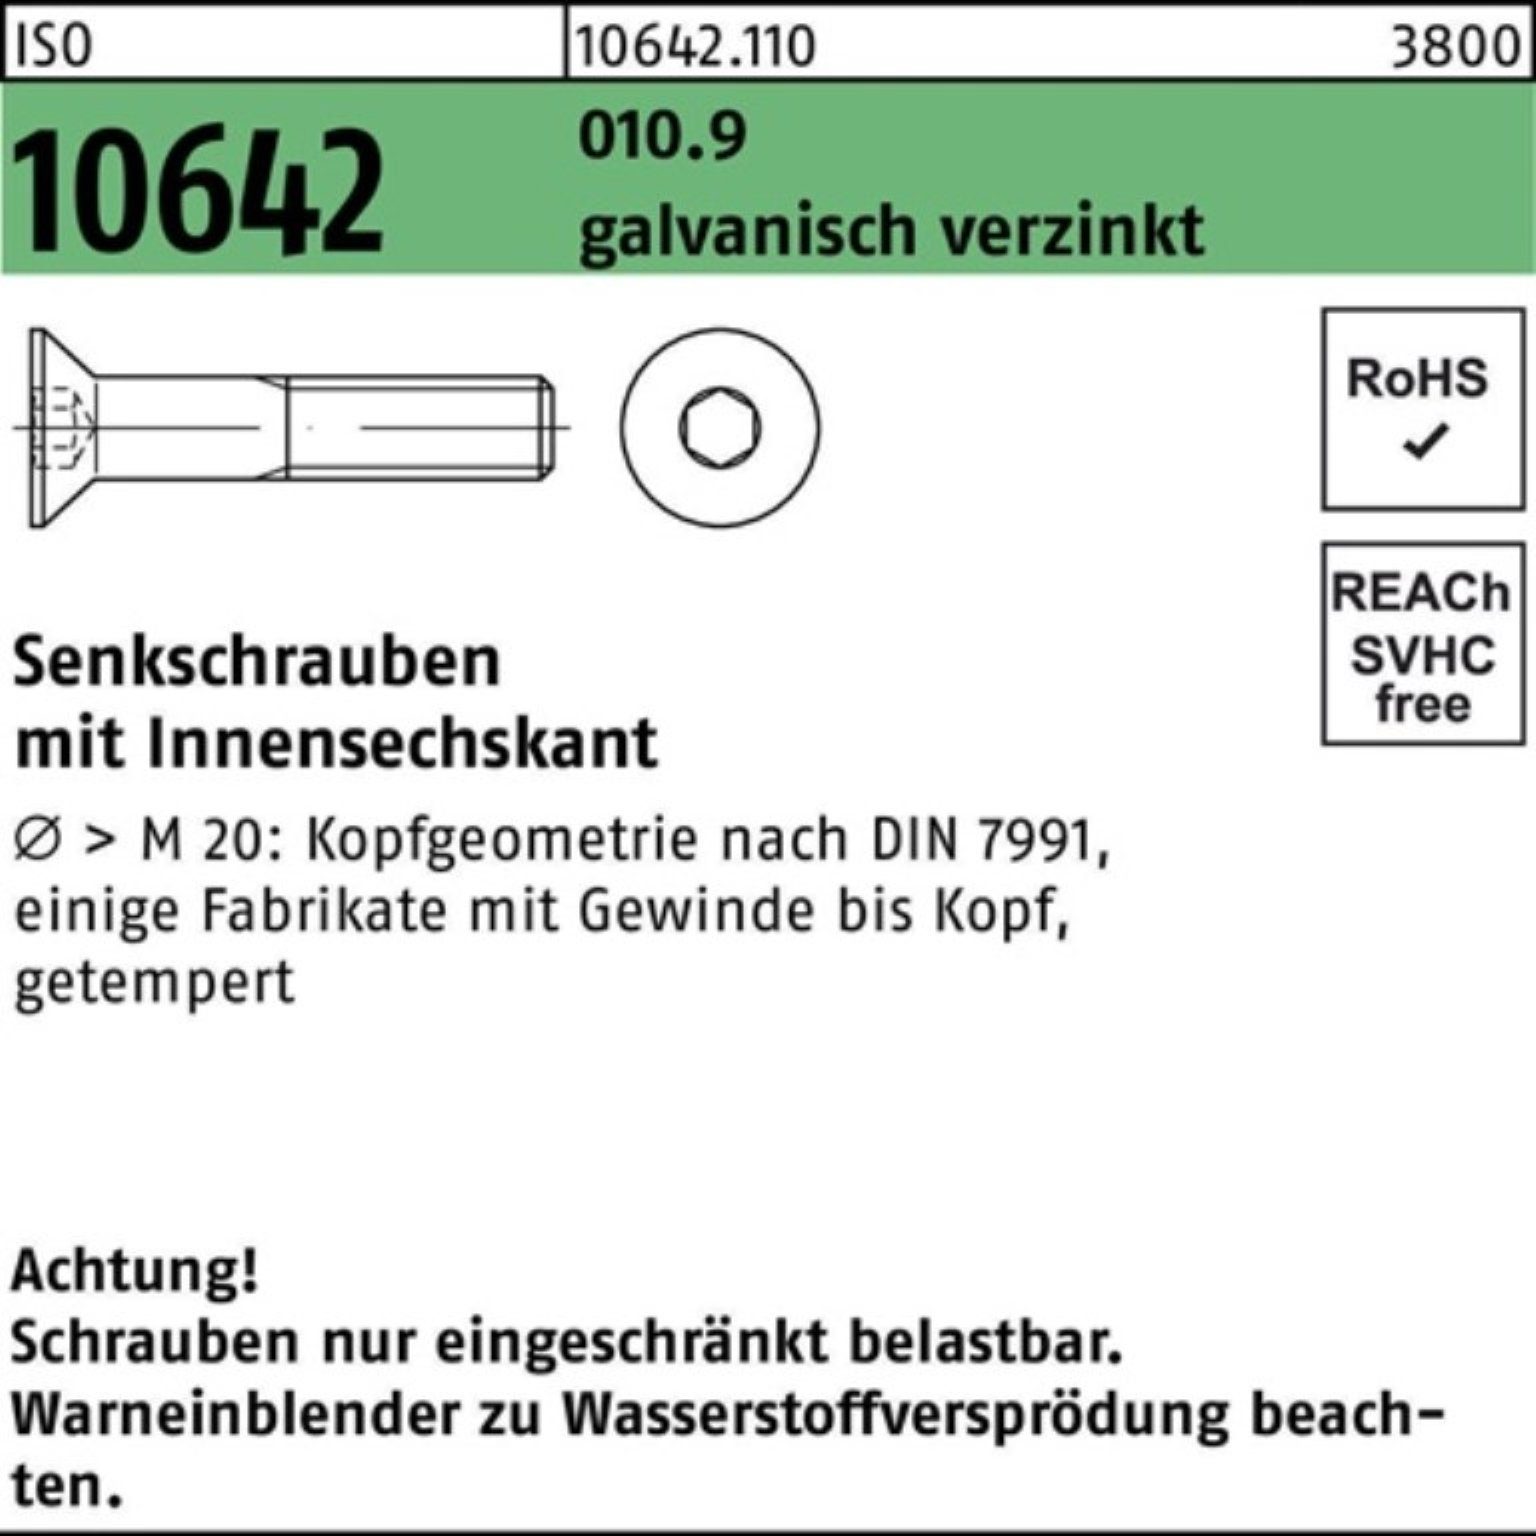 Reyher Senkschraube 500er Pack Senkschraube ISO 10642 Innen-6kt M3x 6 010.9 galv.verz. 500